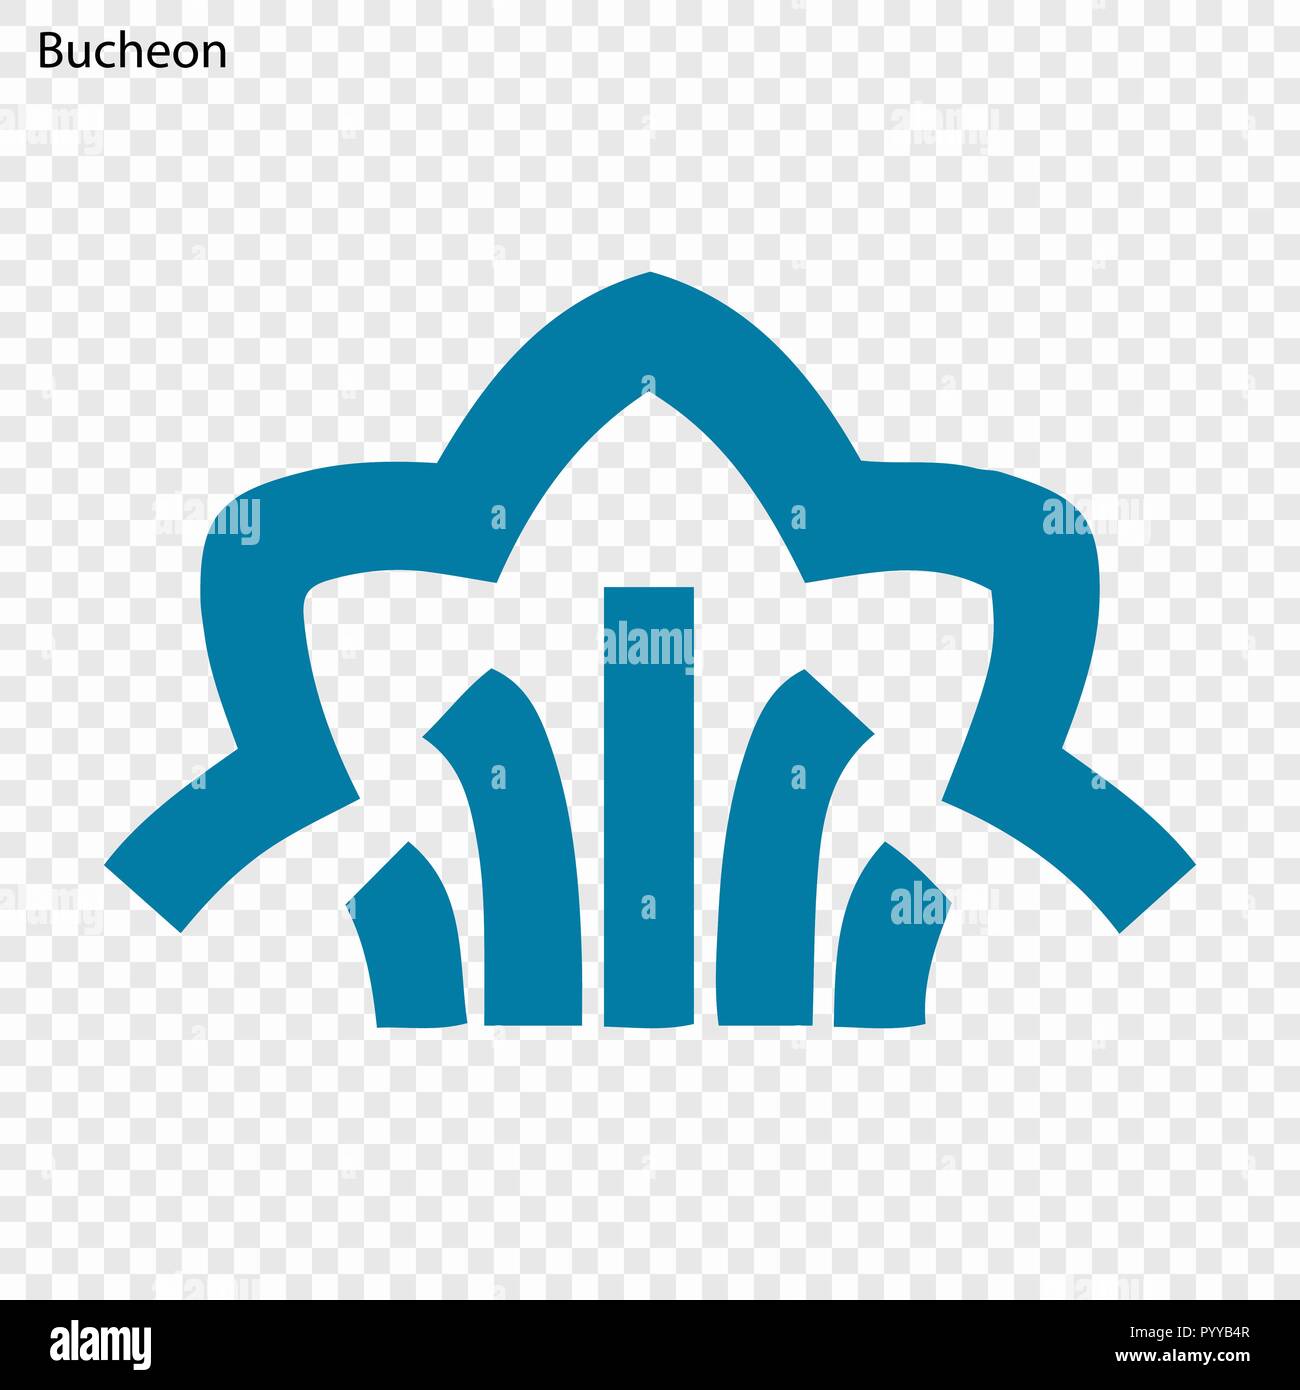 Emblem of Bucheon. City of South Korea. Vector illustration Stock Vector